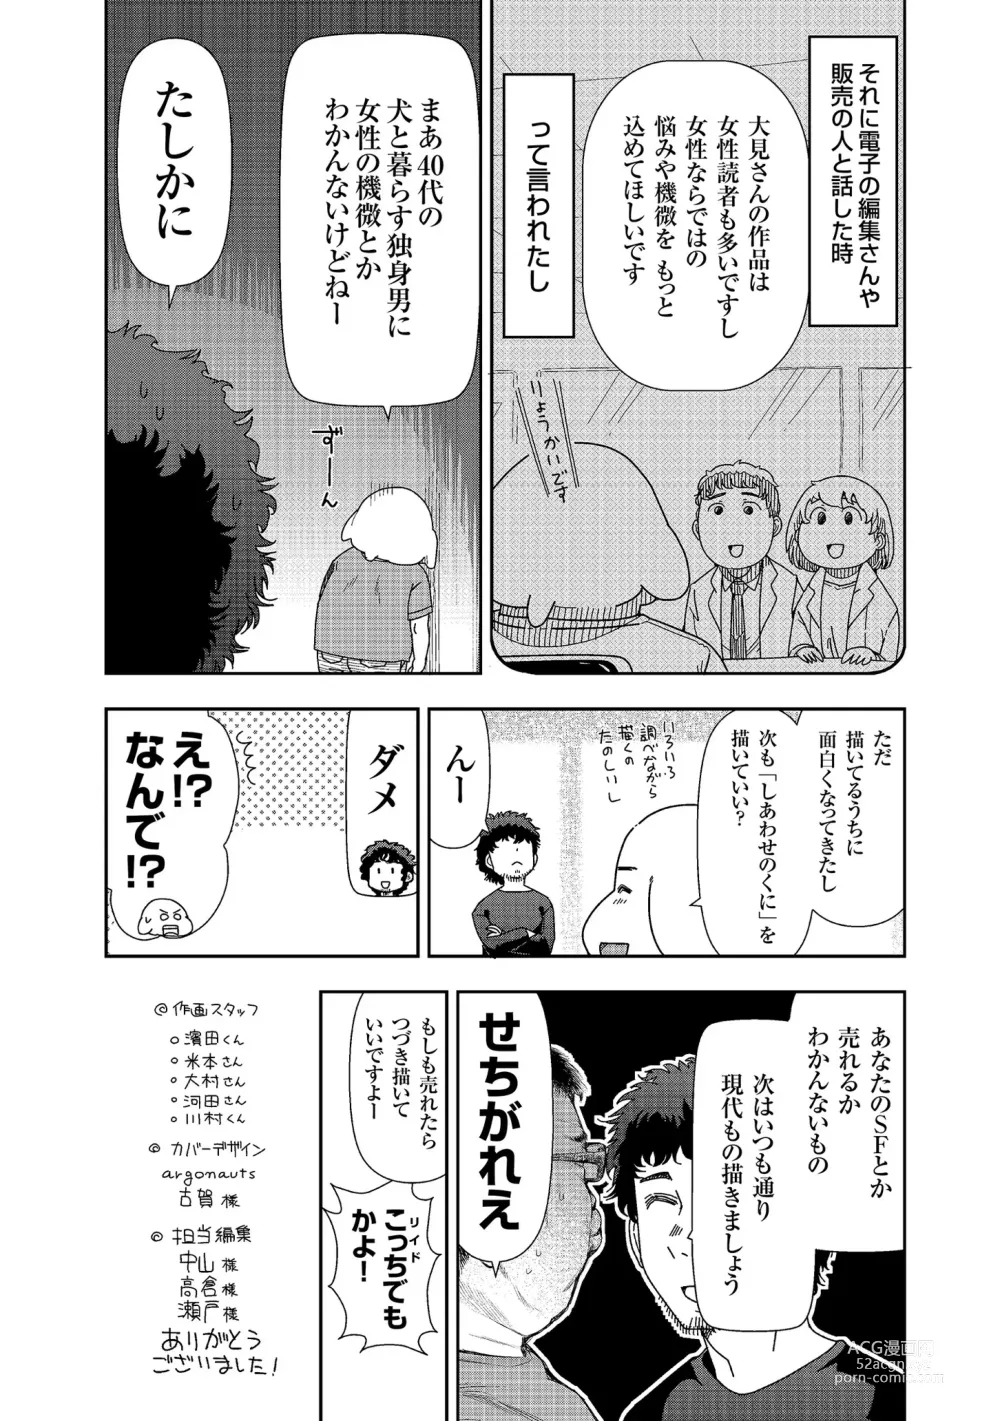 Page 183 of manga Shiawase no Kuni